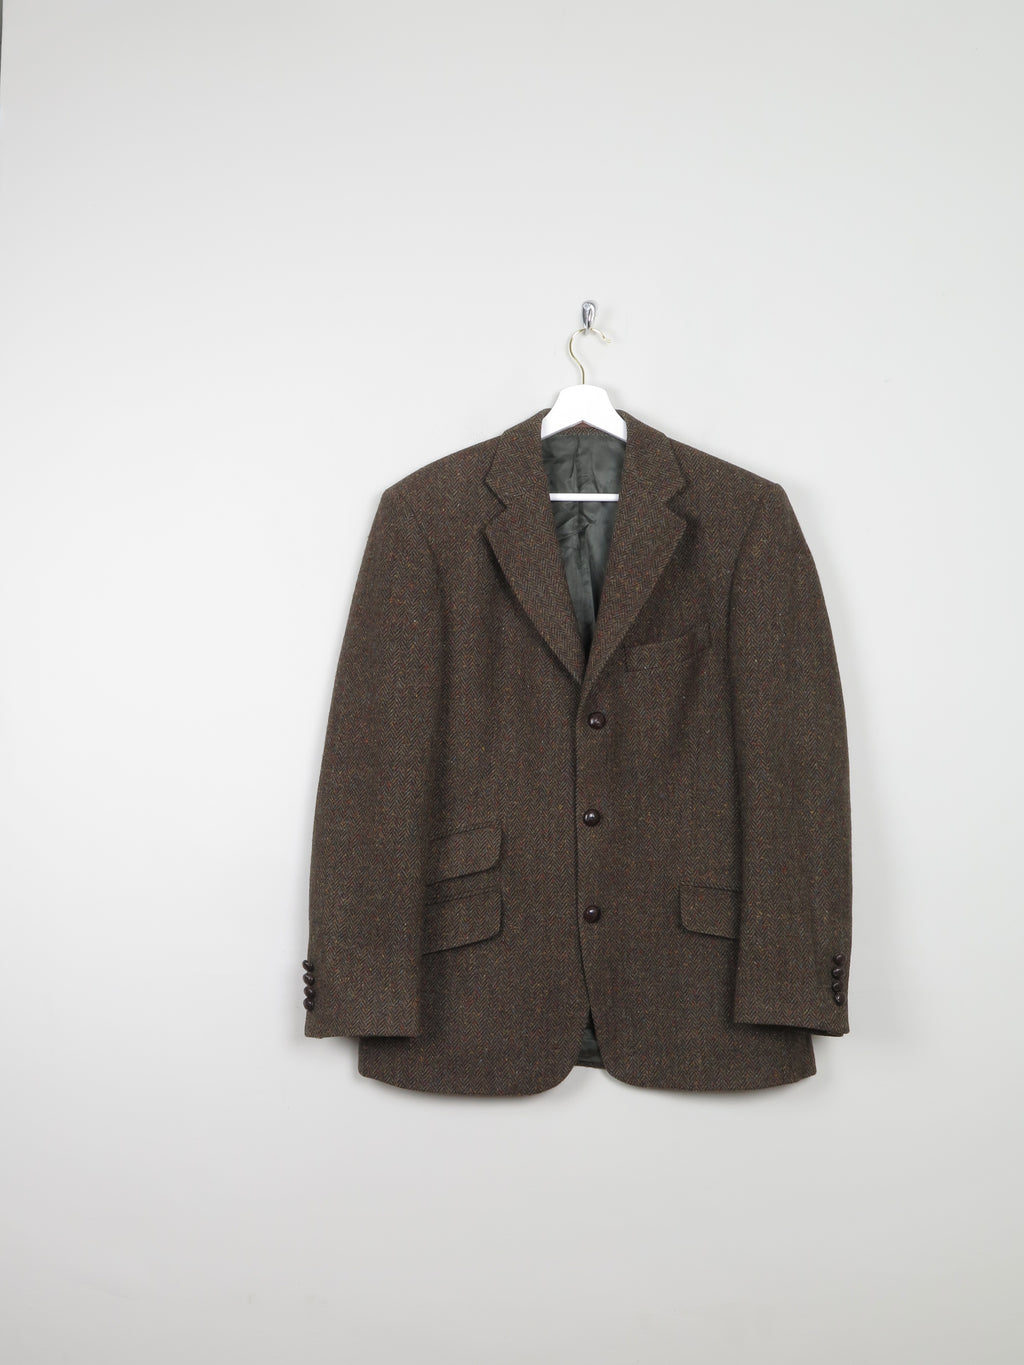 Men's Green Donegal  Tweed Jacket 42"